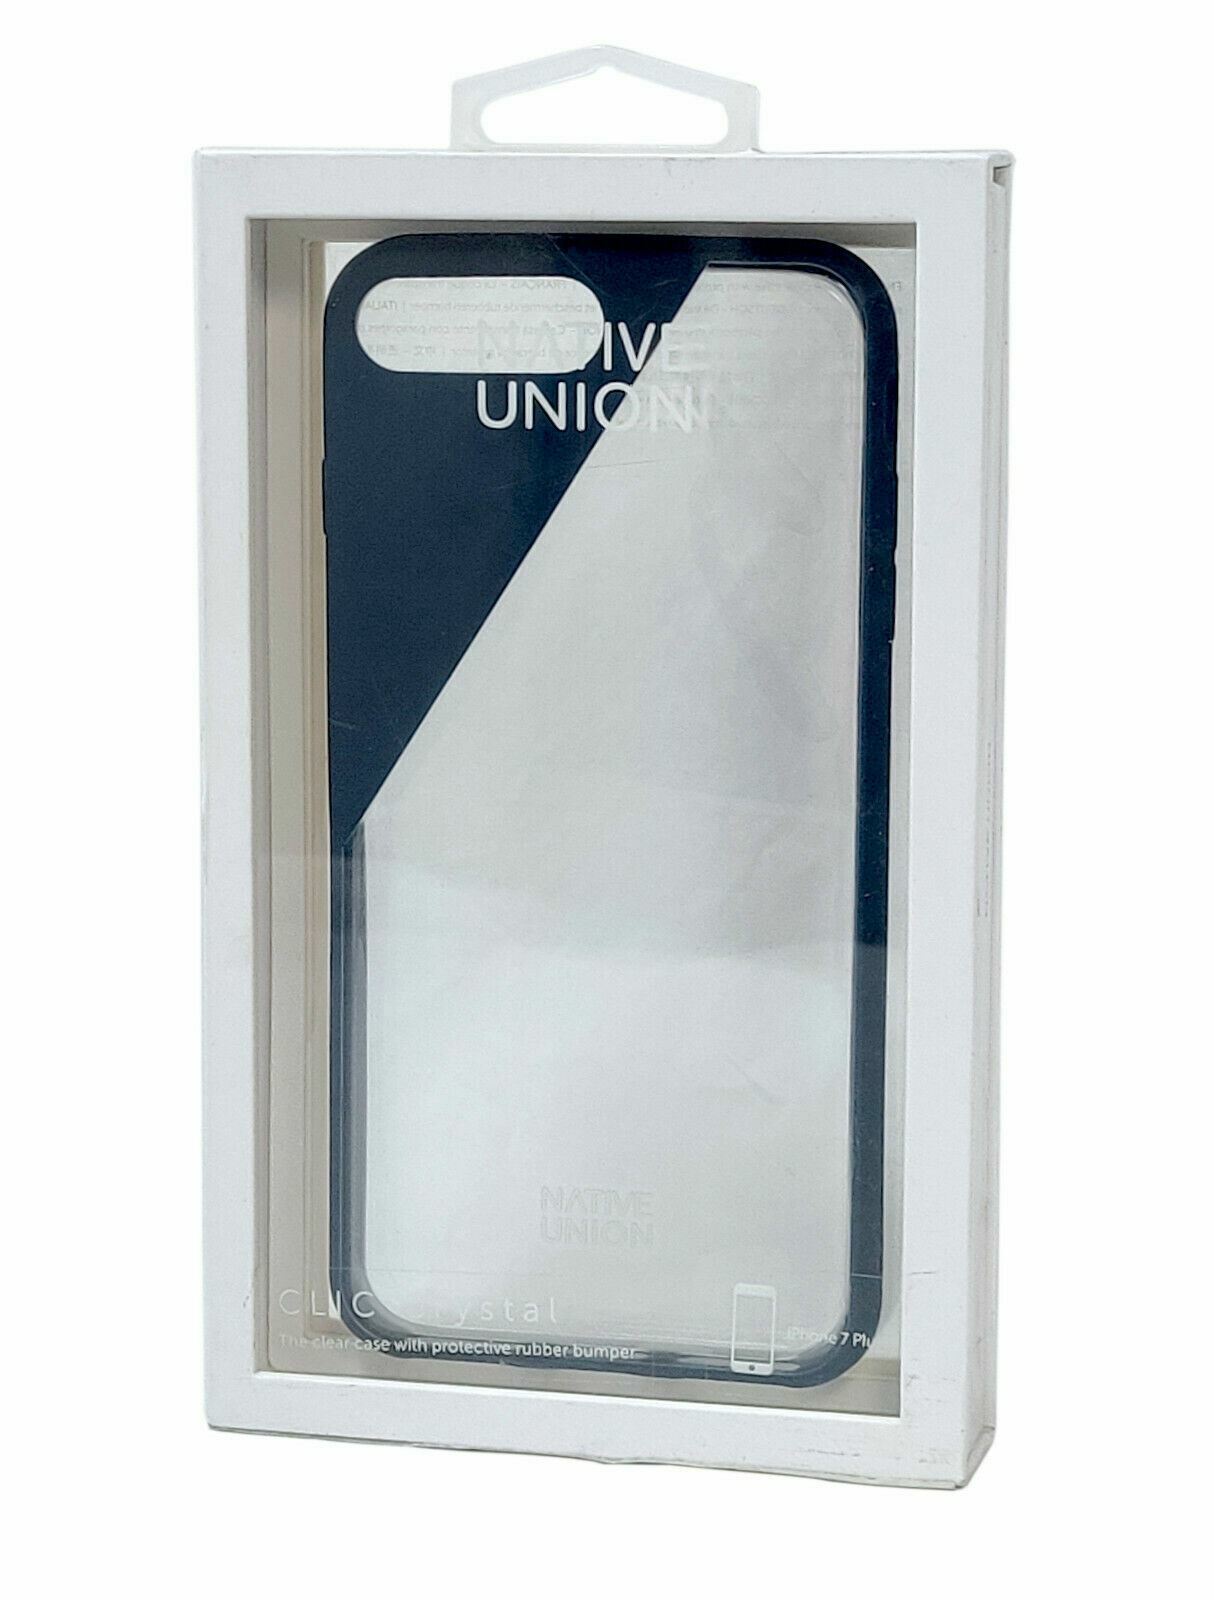 Native Union CLIC Crystal Case for iPhone 8+ 7+ PLUS MARINE BLUE transparent - $9.36